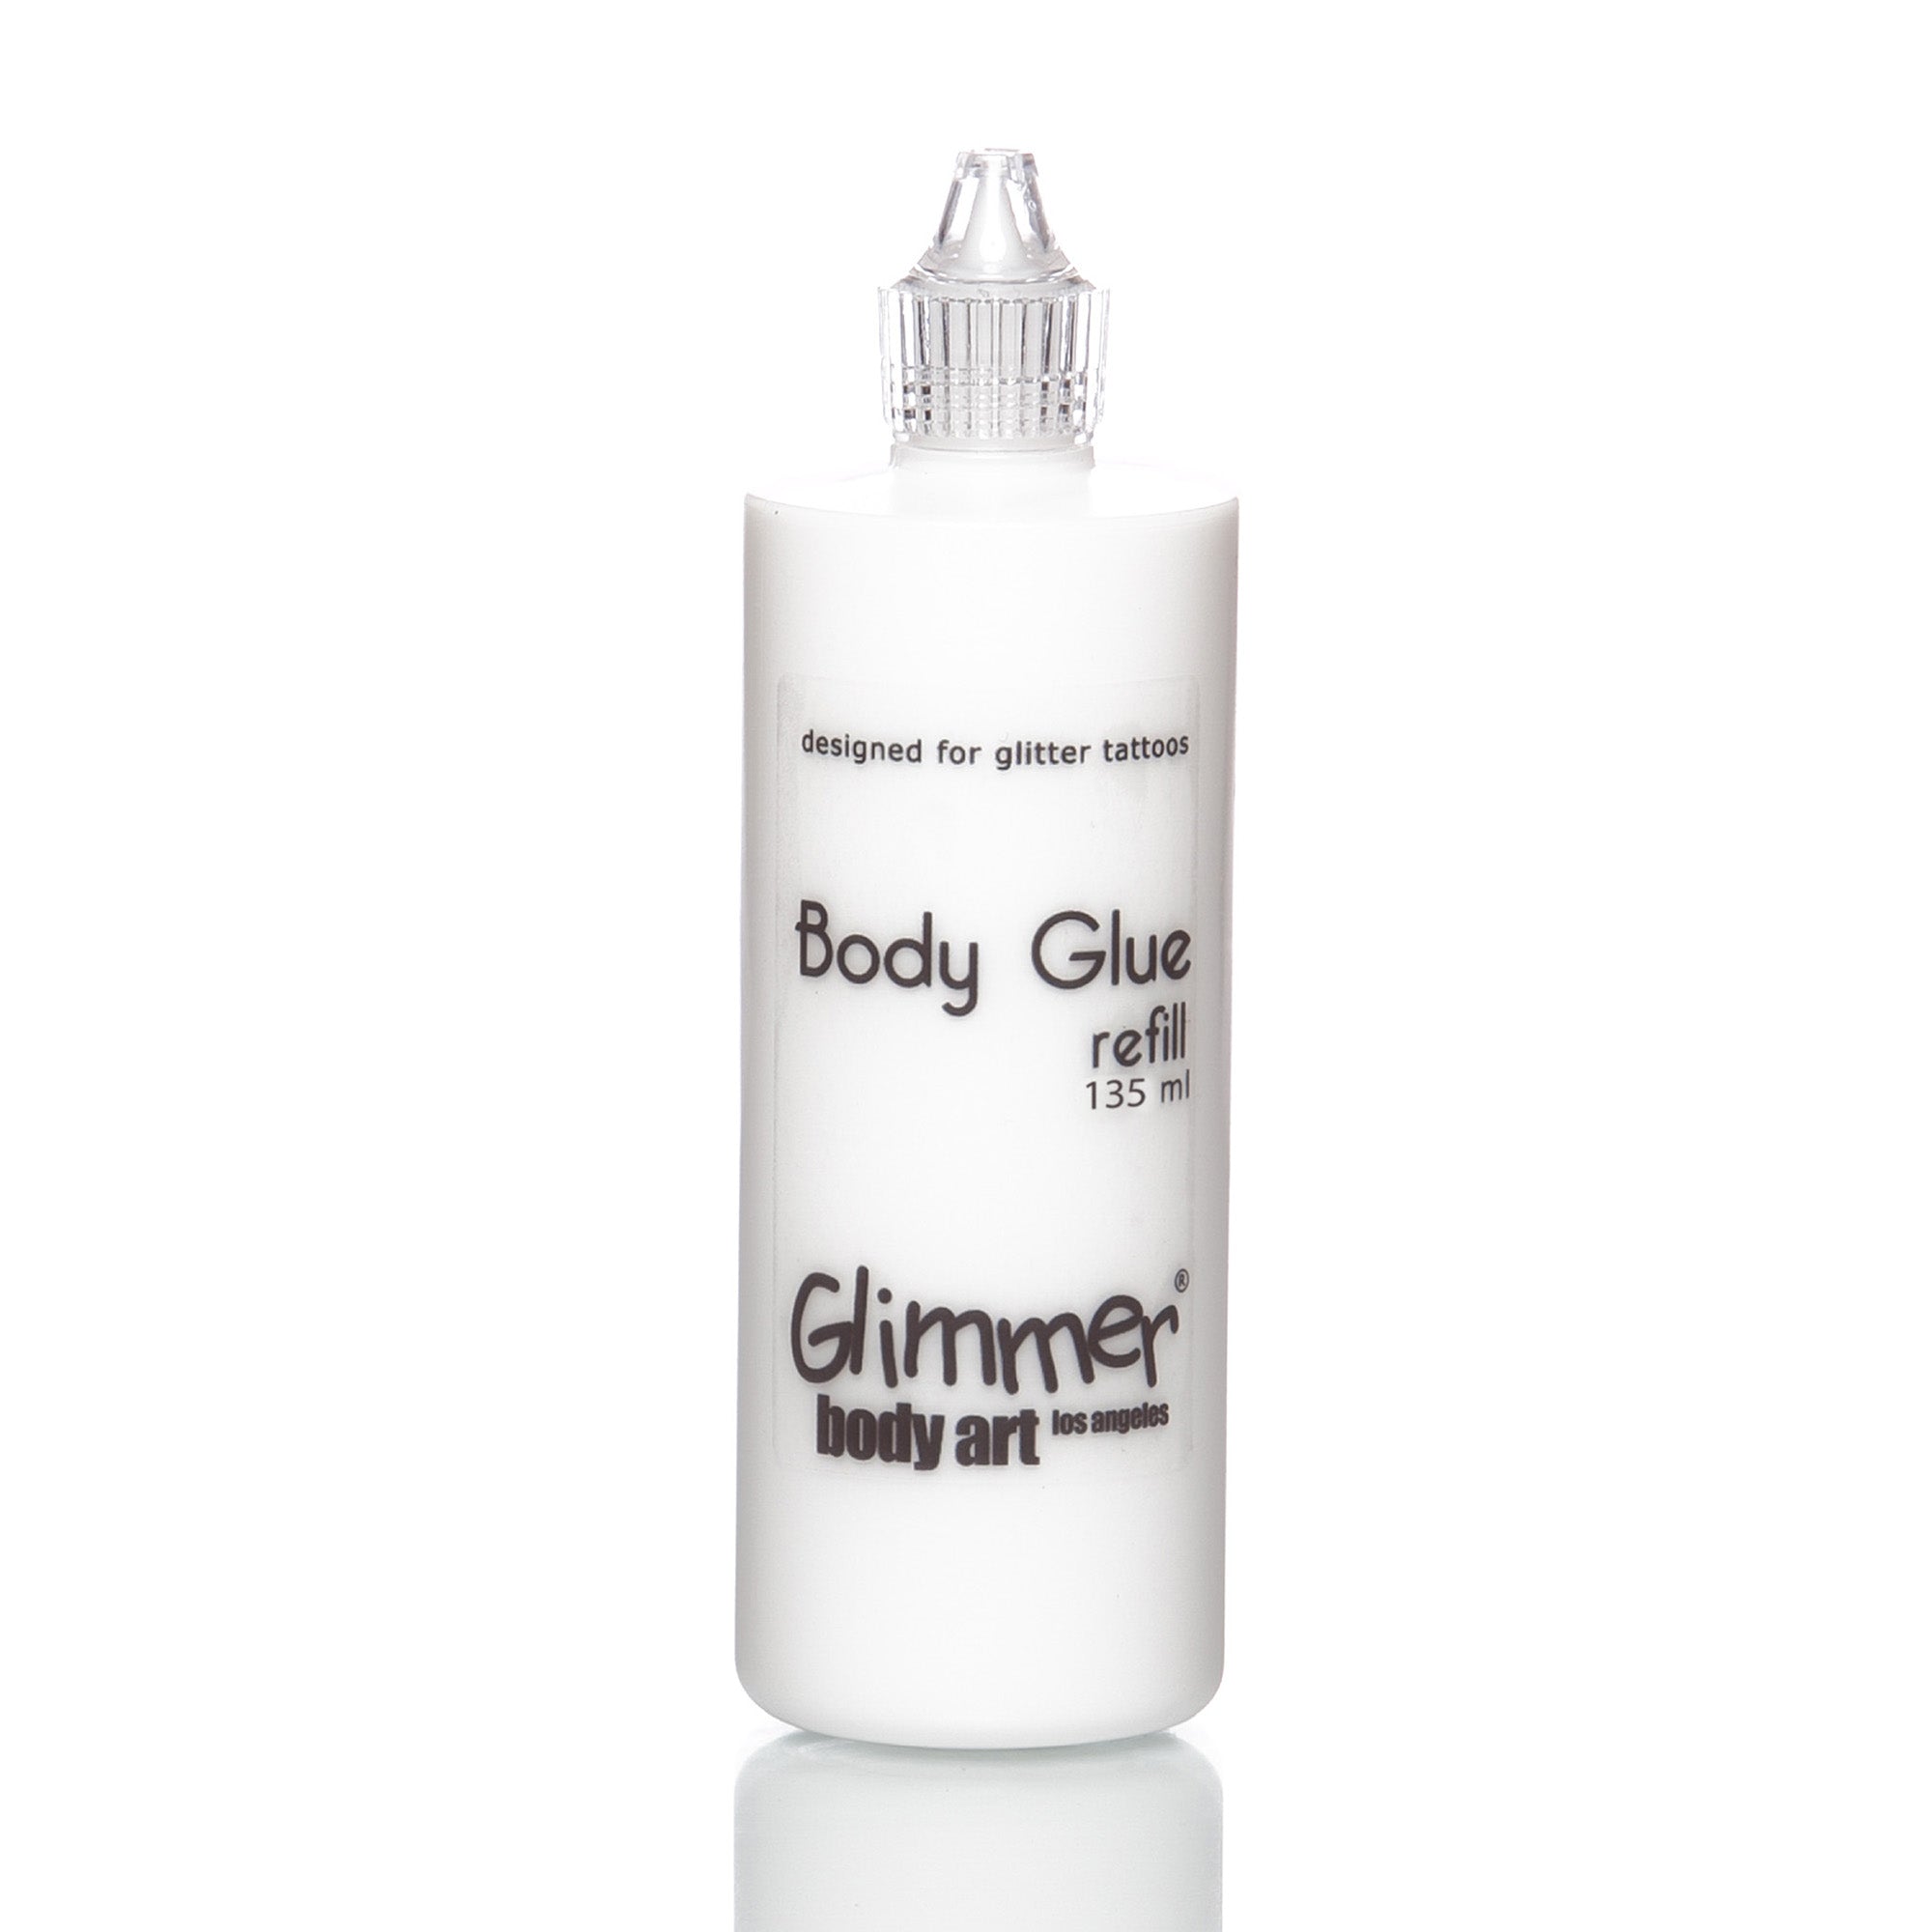 Glimmer Body Art Glitter Tattoo Skin Glue